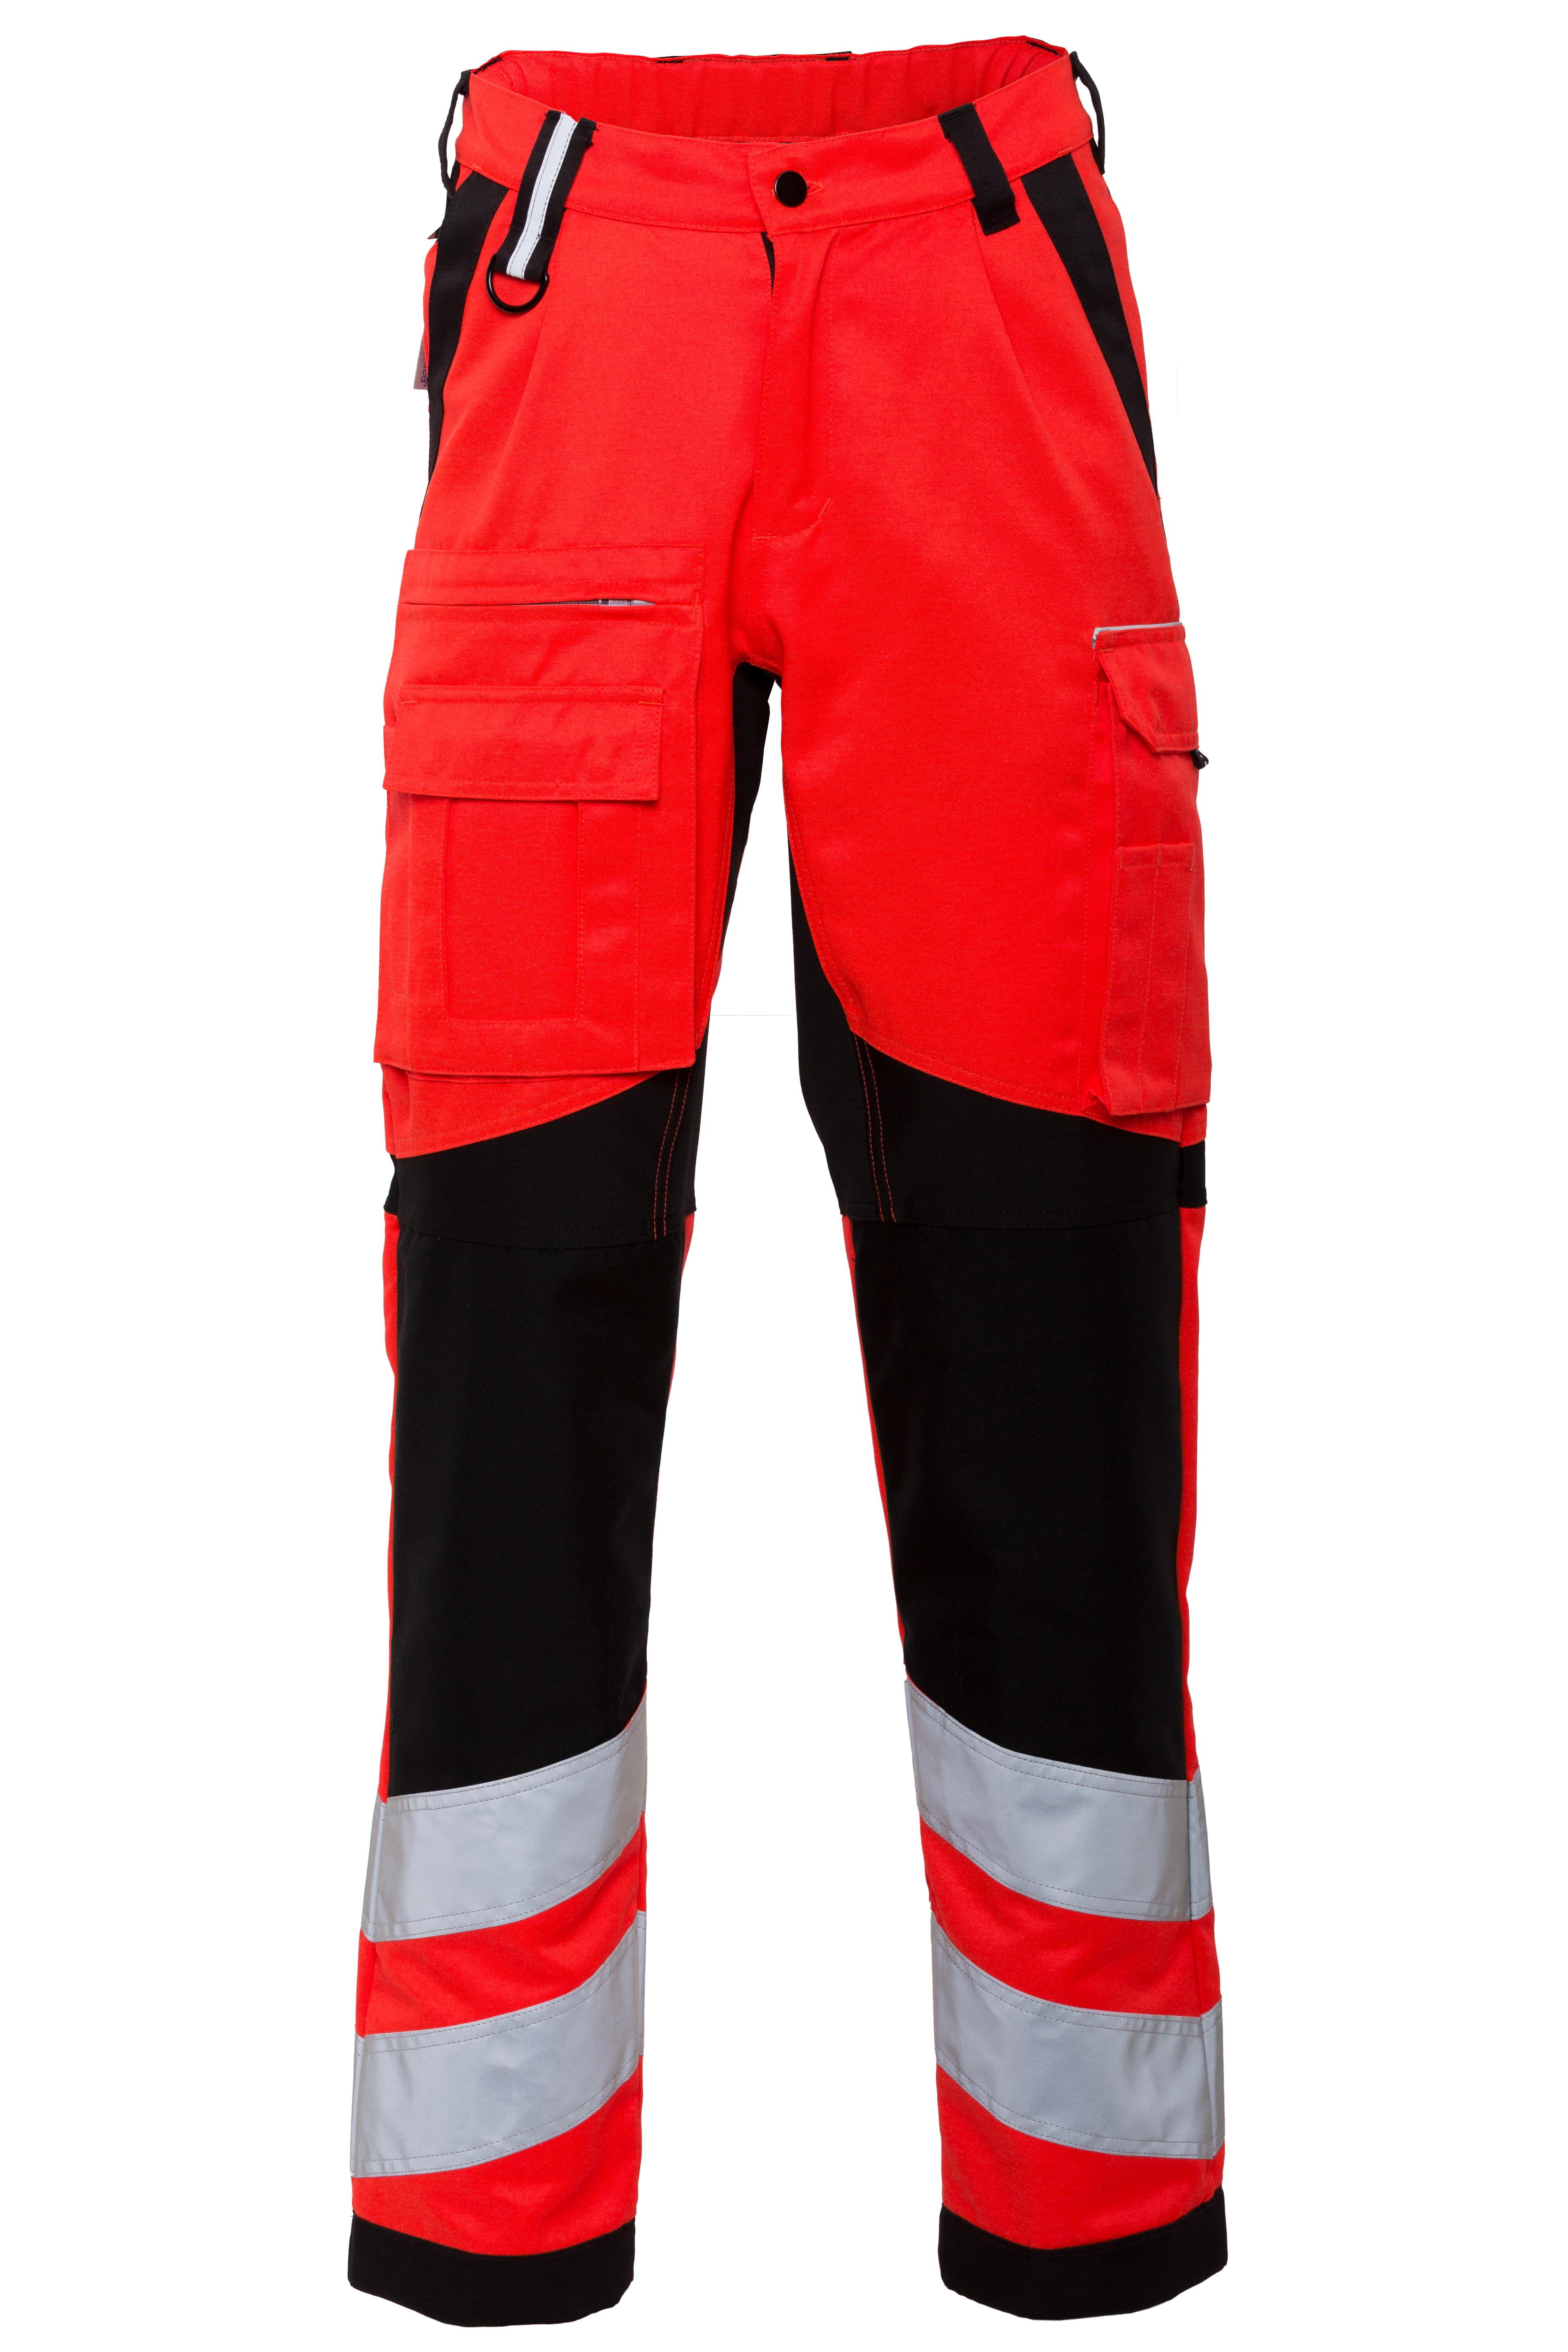 Rescuewear Unisex Hose 33413SCORD Stretch HiVis Klasse 2 Neon Rot / Schwarz